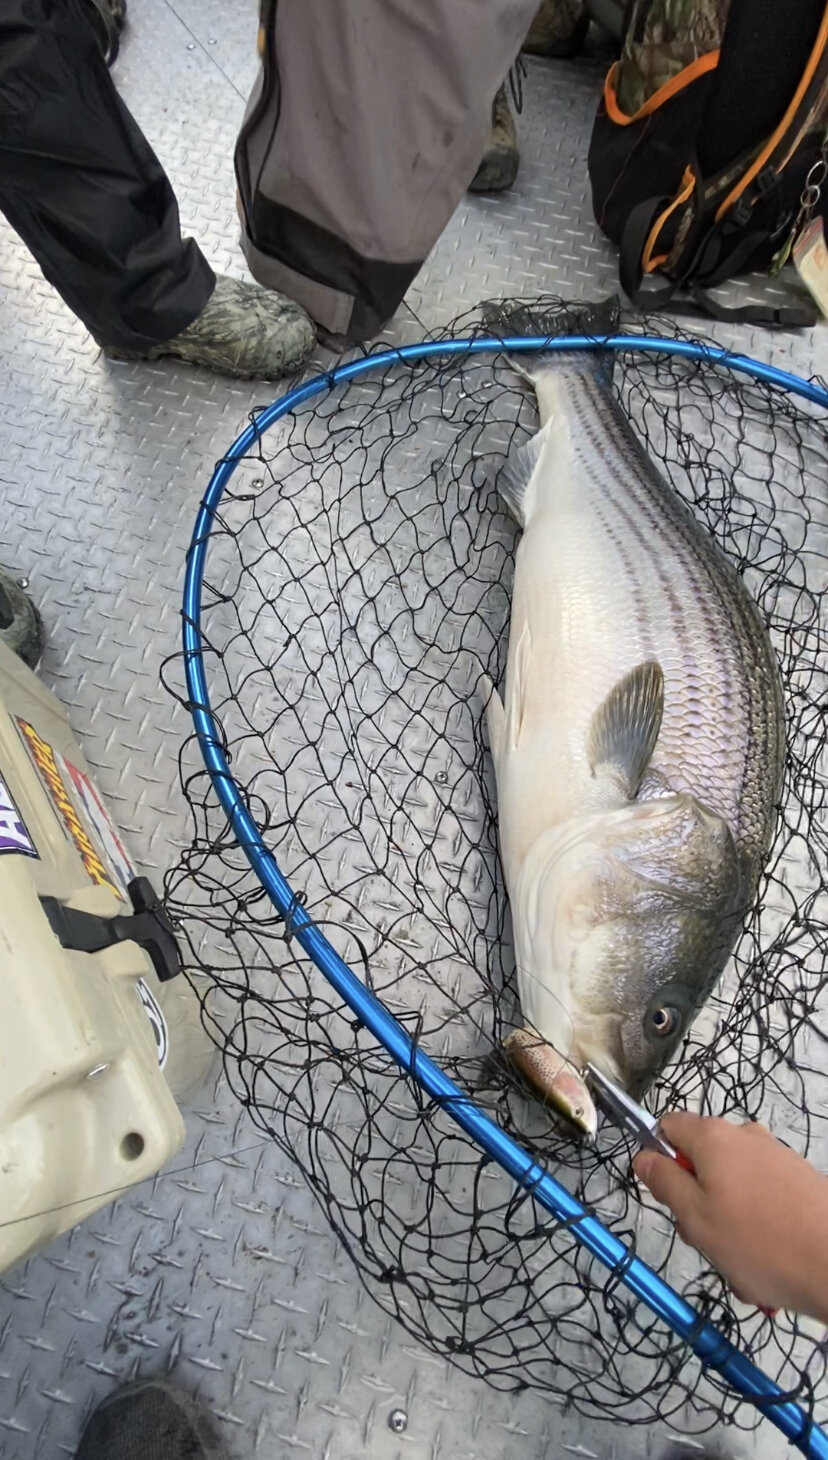 Northern California Striped Bass Fishing Report January 27, 2021